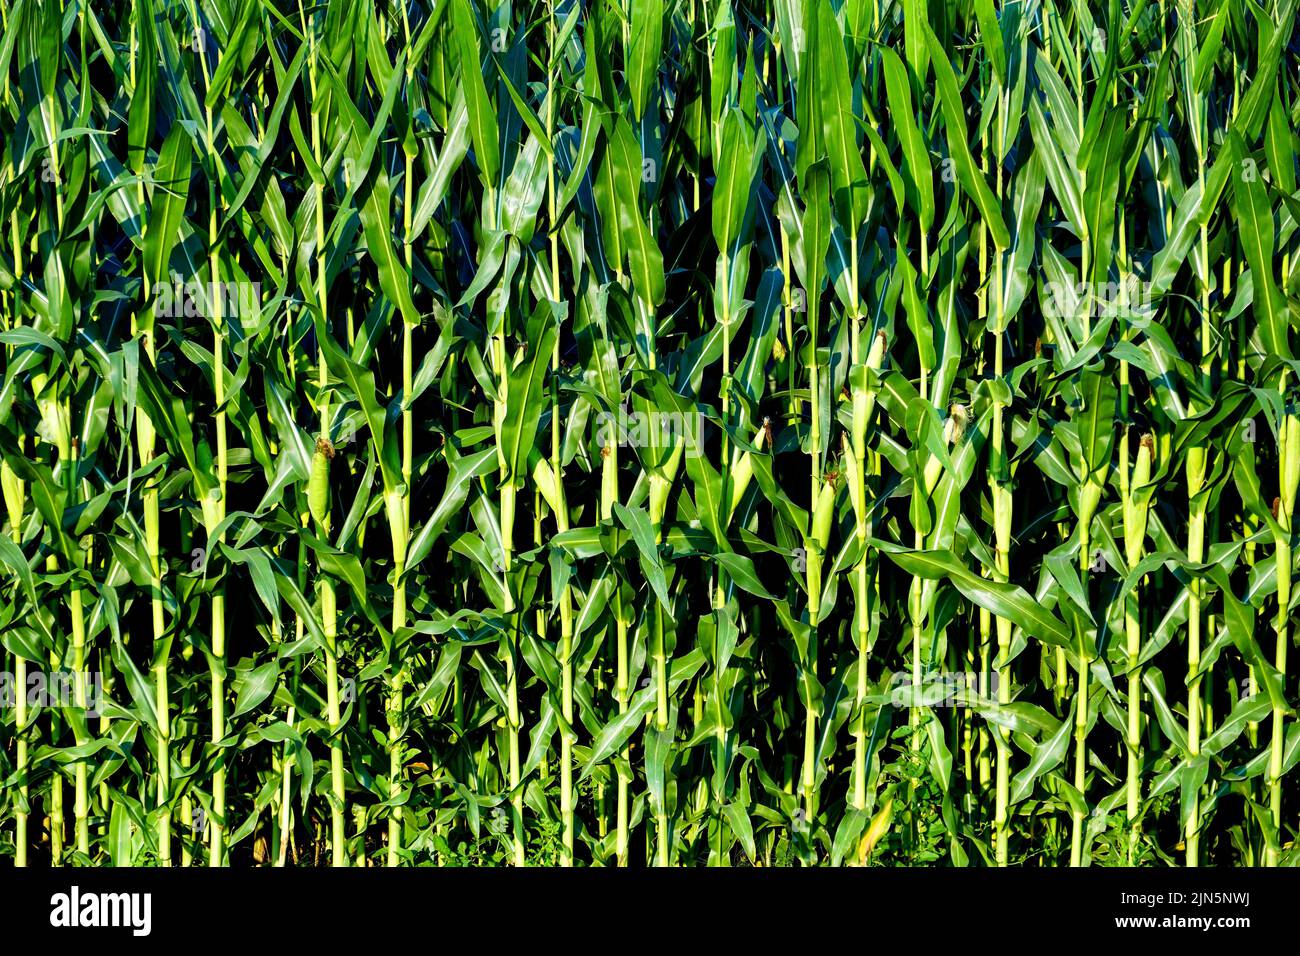 Green corn stalks background. Green corn field in the summer. Stock Photo